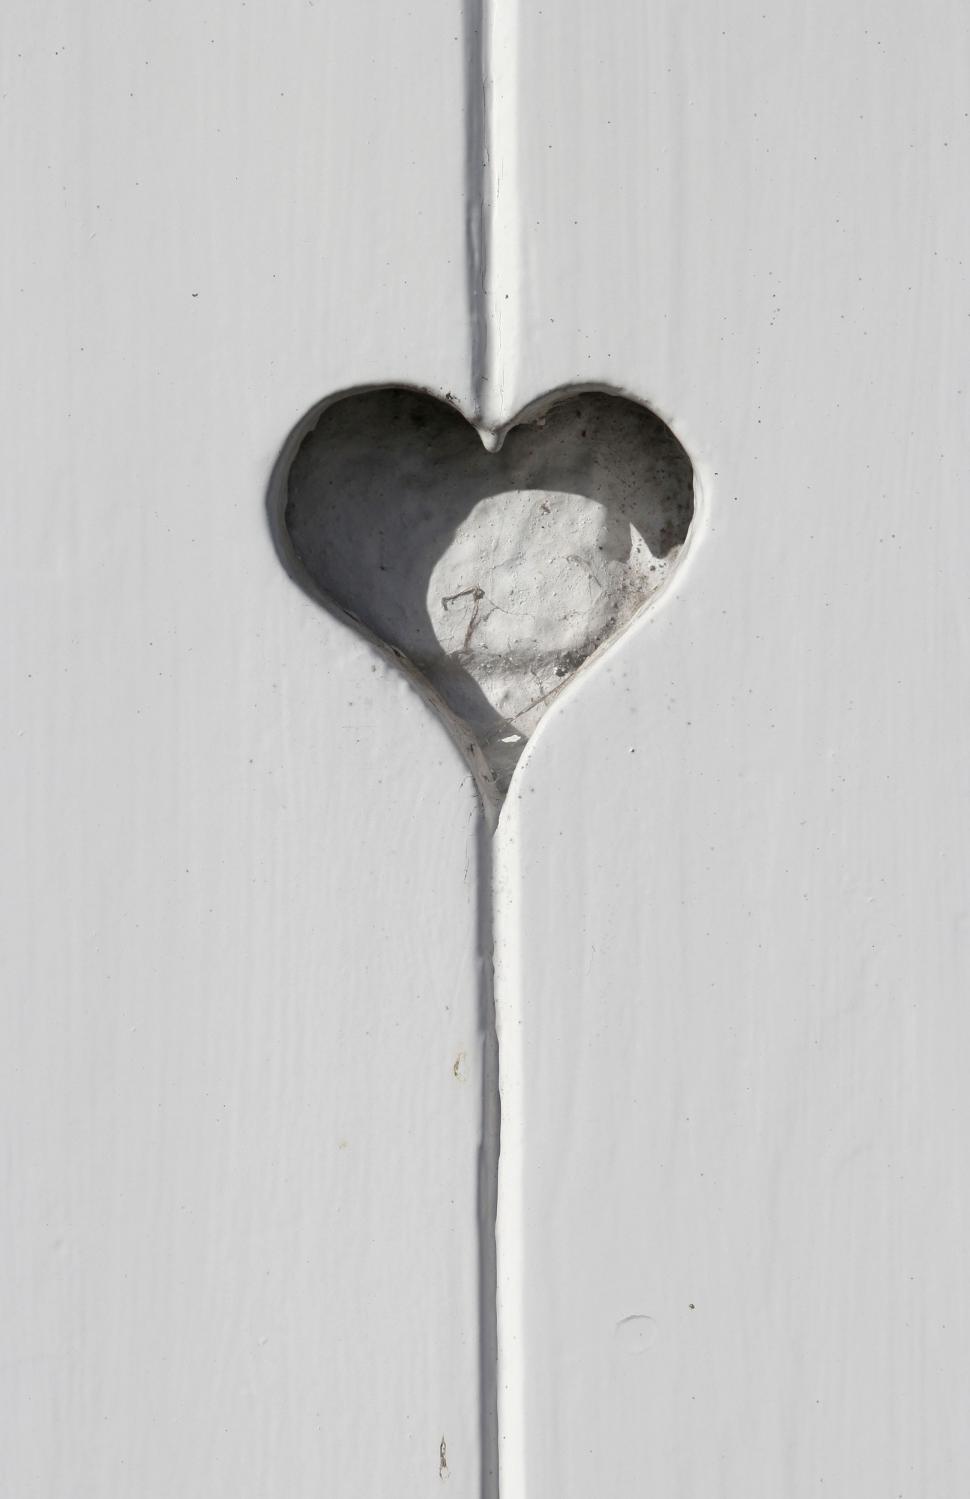 Free Image of Heart Shape on Wall  